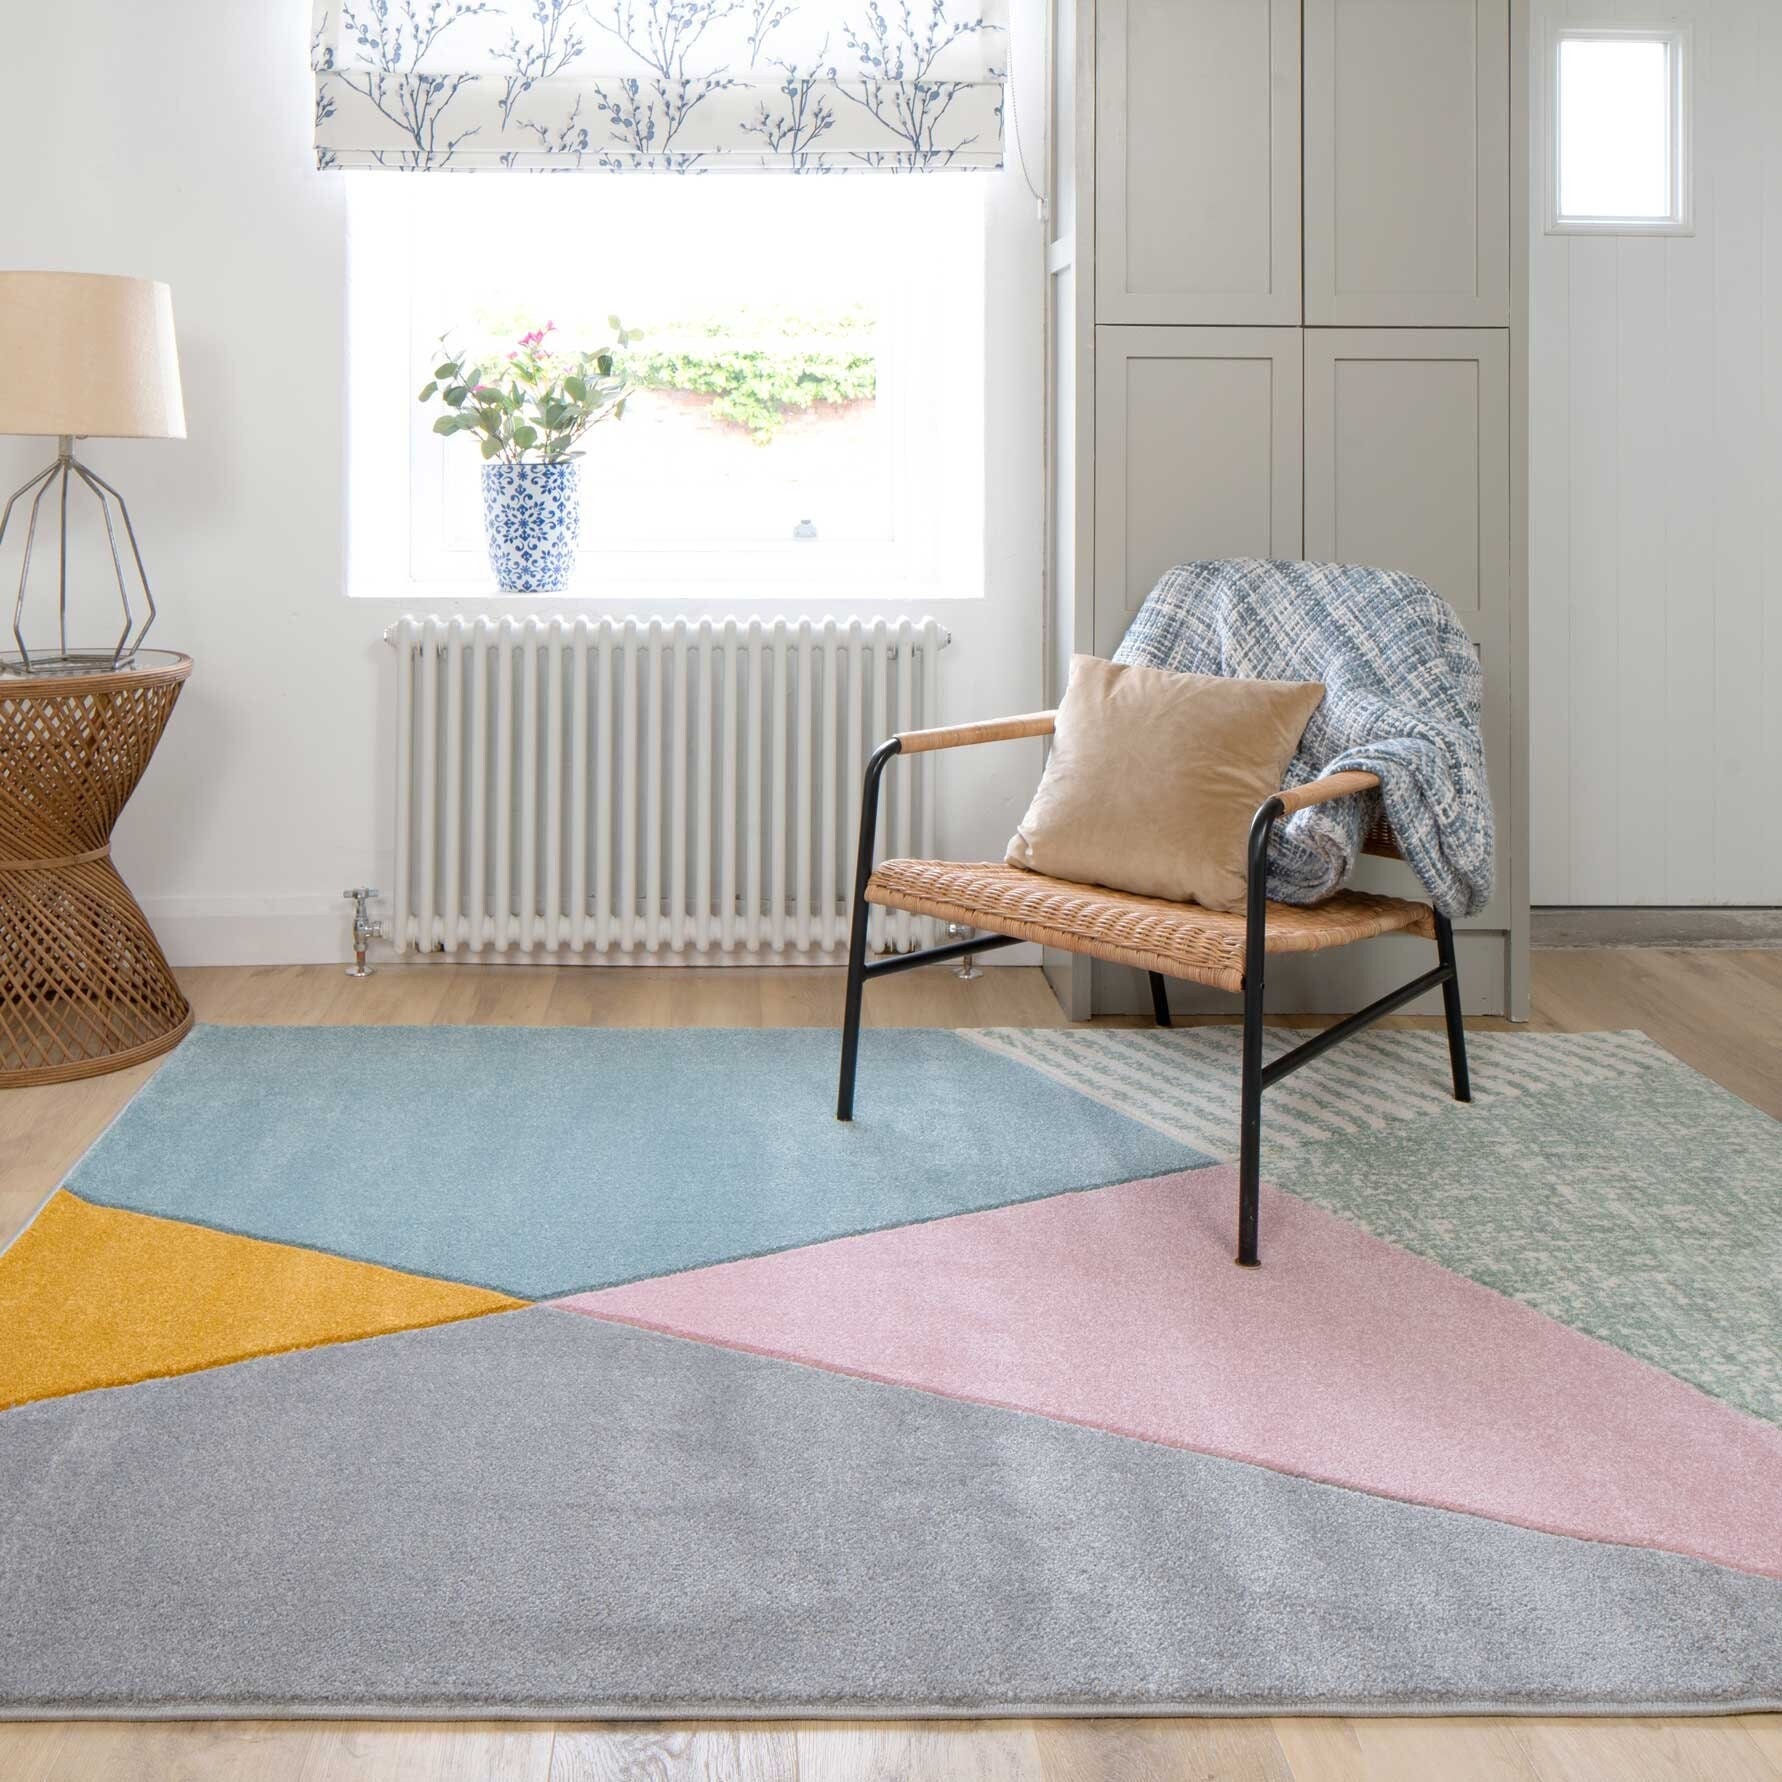 Teal Pink Multicolour Distressed Boho Living Room Rug Washable Non Slip  Colourful Living Area Carpet 